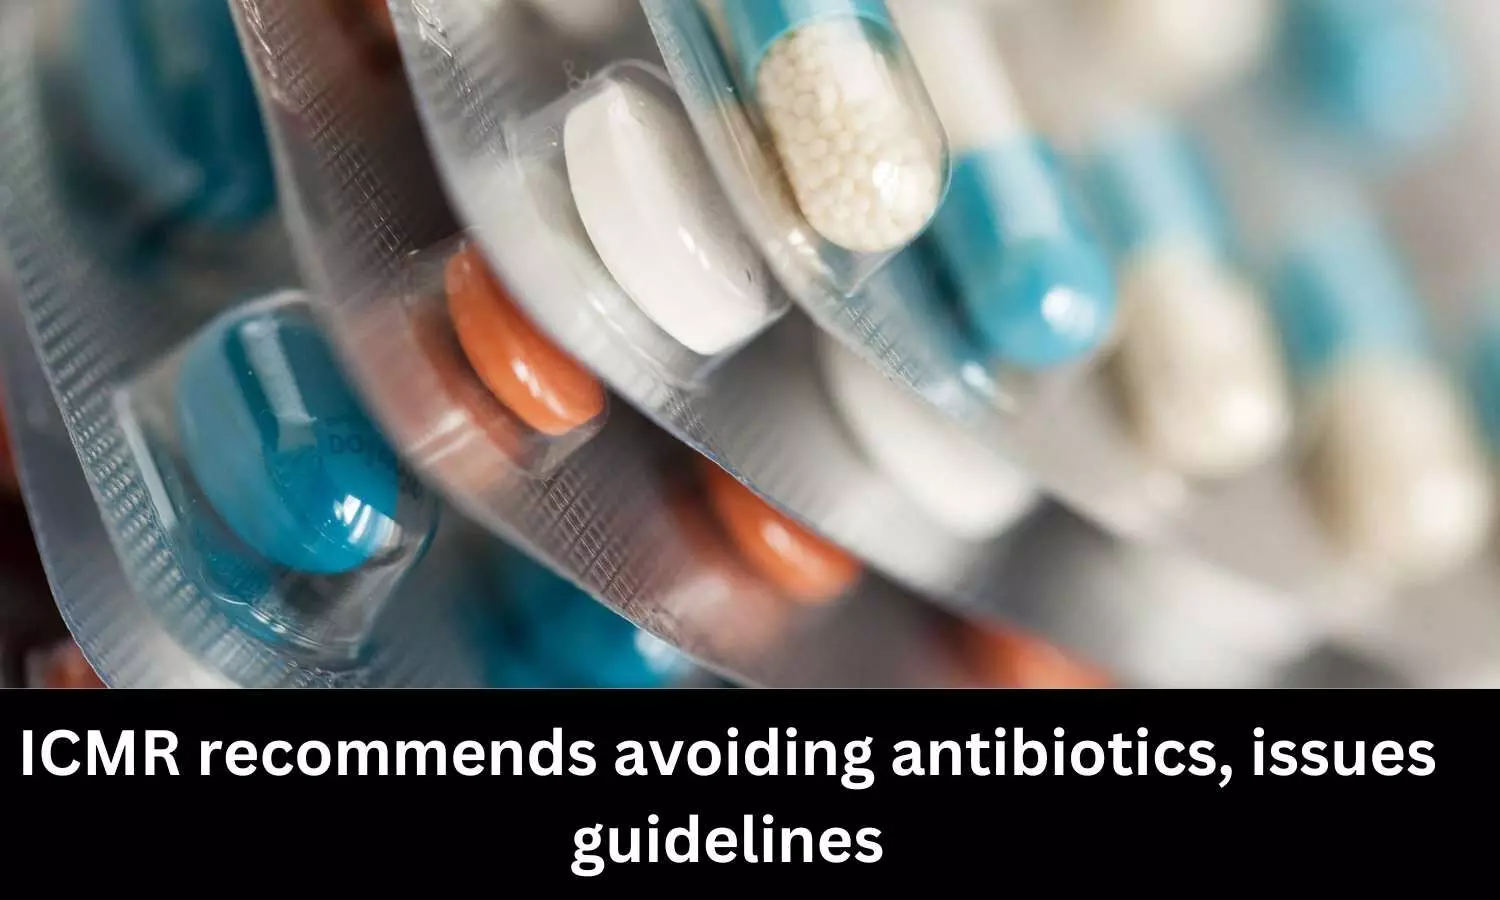 ICMR releases guidelines for prescribing antibiotics